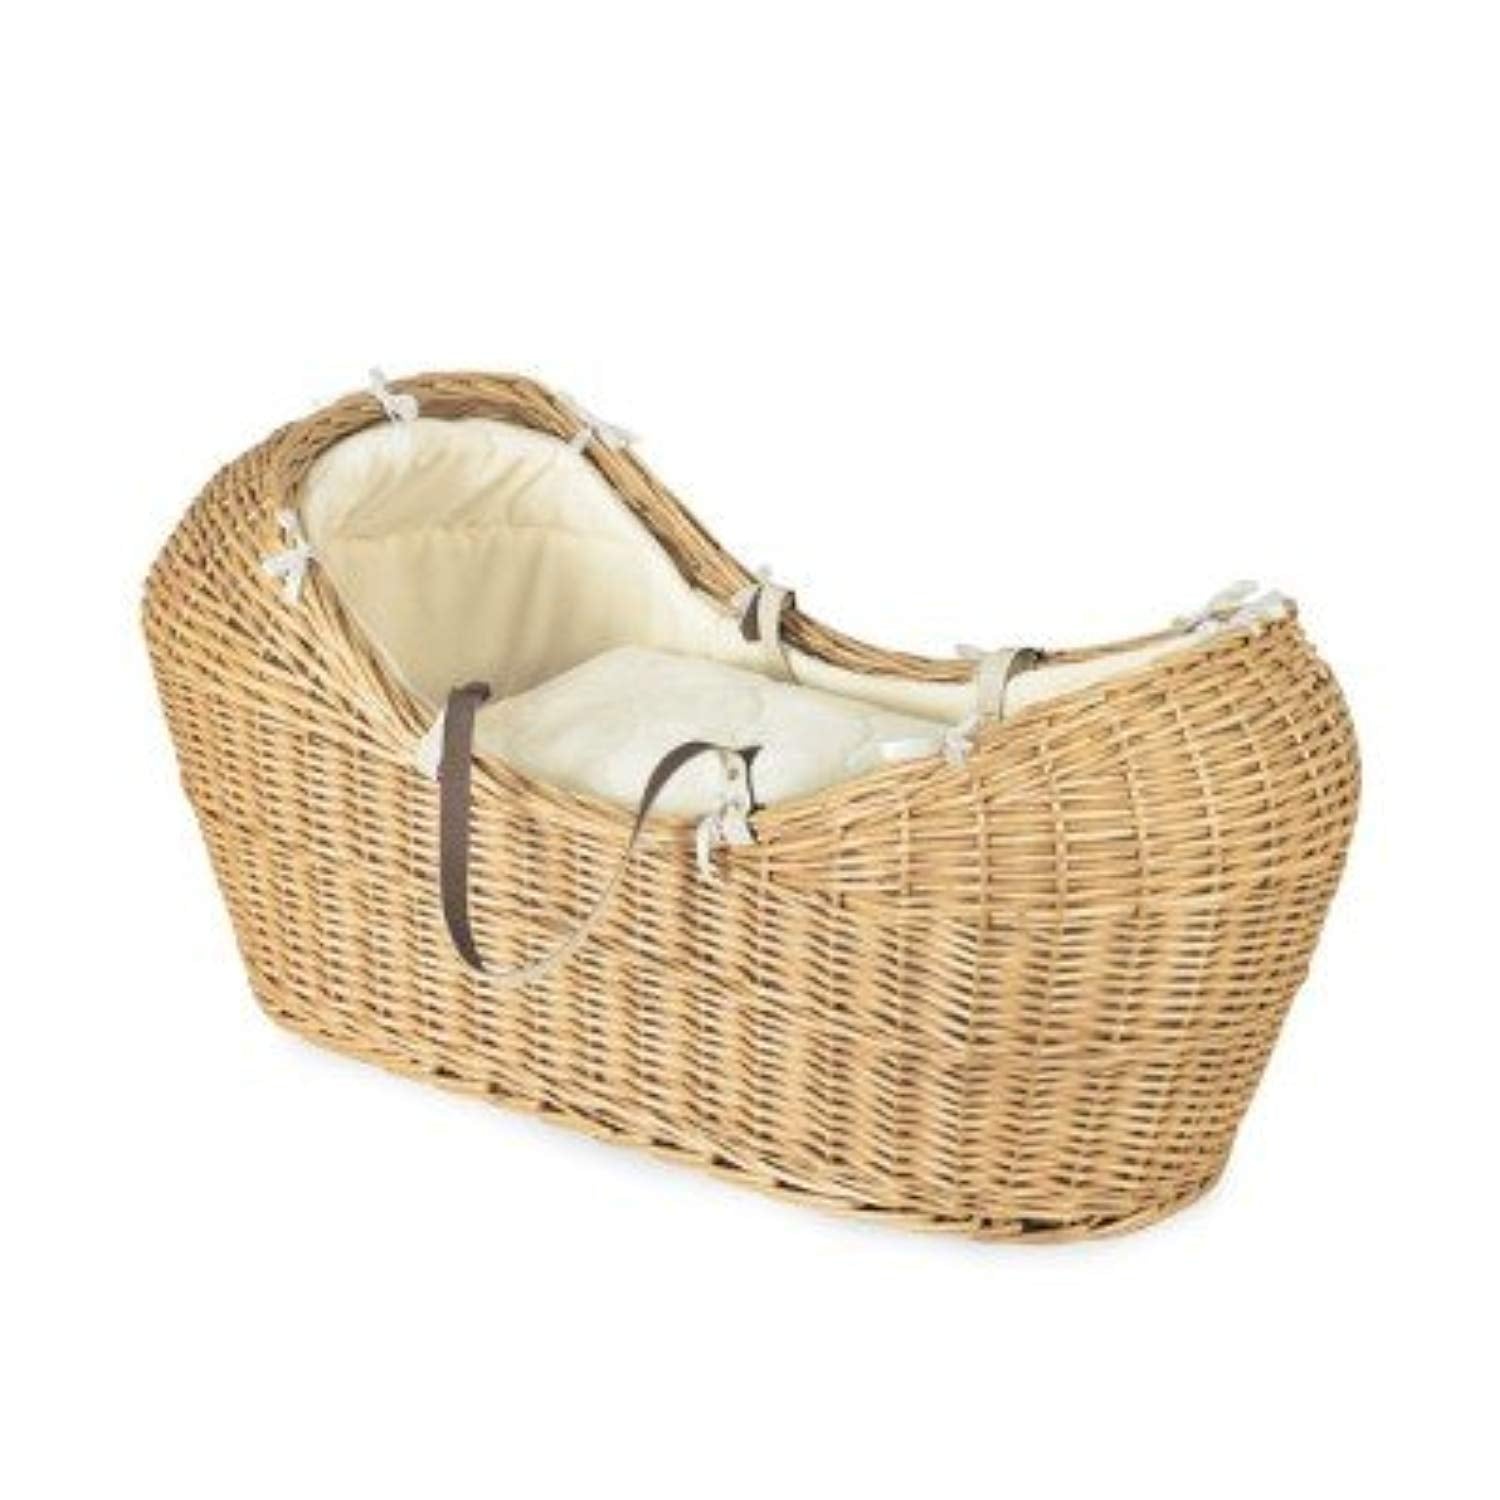 IRA Rattan & Wicker The Snug Moses Basket (Natural, 78x30cm) - IRA Furniture